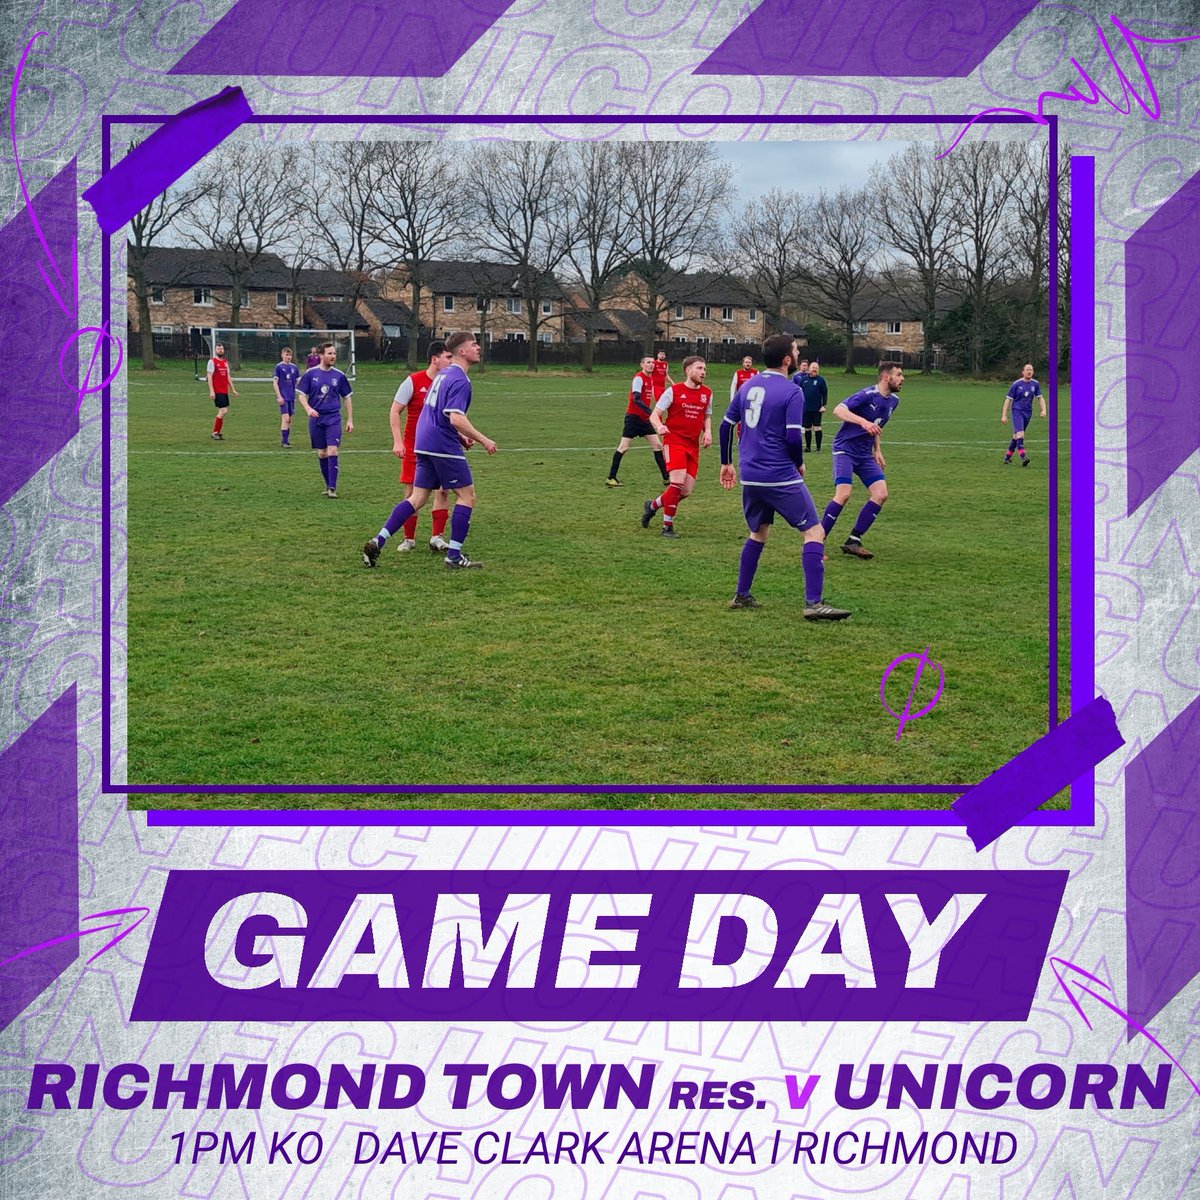 GAME DAY! Big Dales Cup Semi today vs Town!
🆚 Richmond Town Res.
🏆 Dales Cup Semi
📍 Dave Clark Arena
⏰ 1pm KO
#earlyko #grassroots #semi #unicorn #unicornfc 🦄🦄